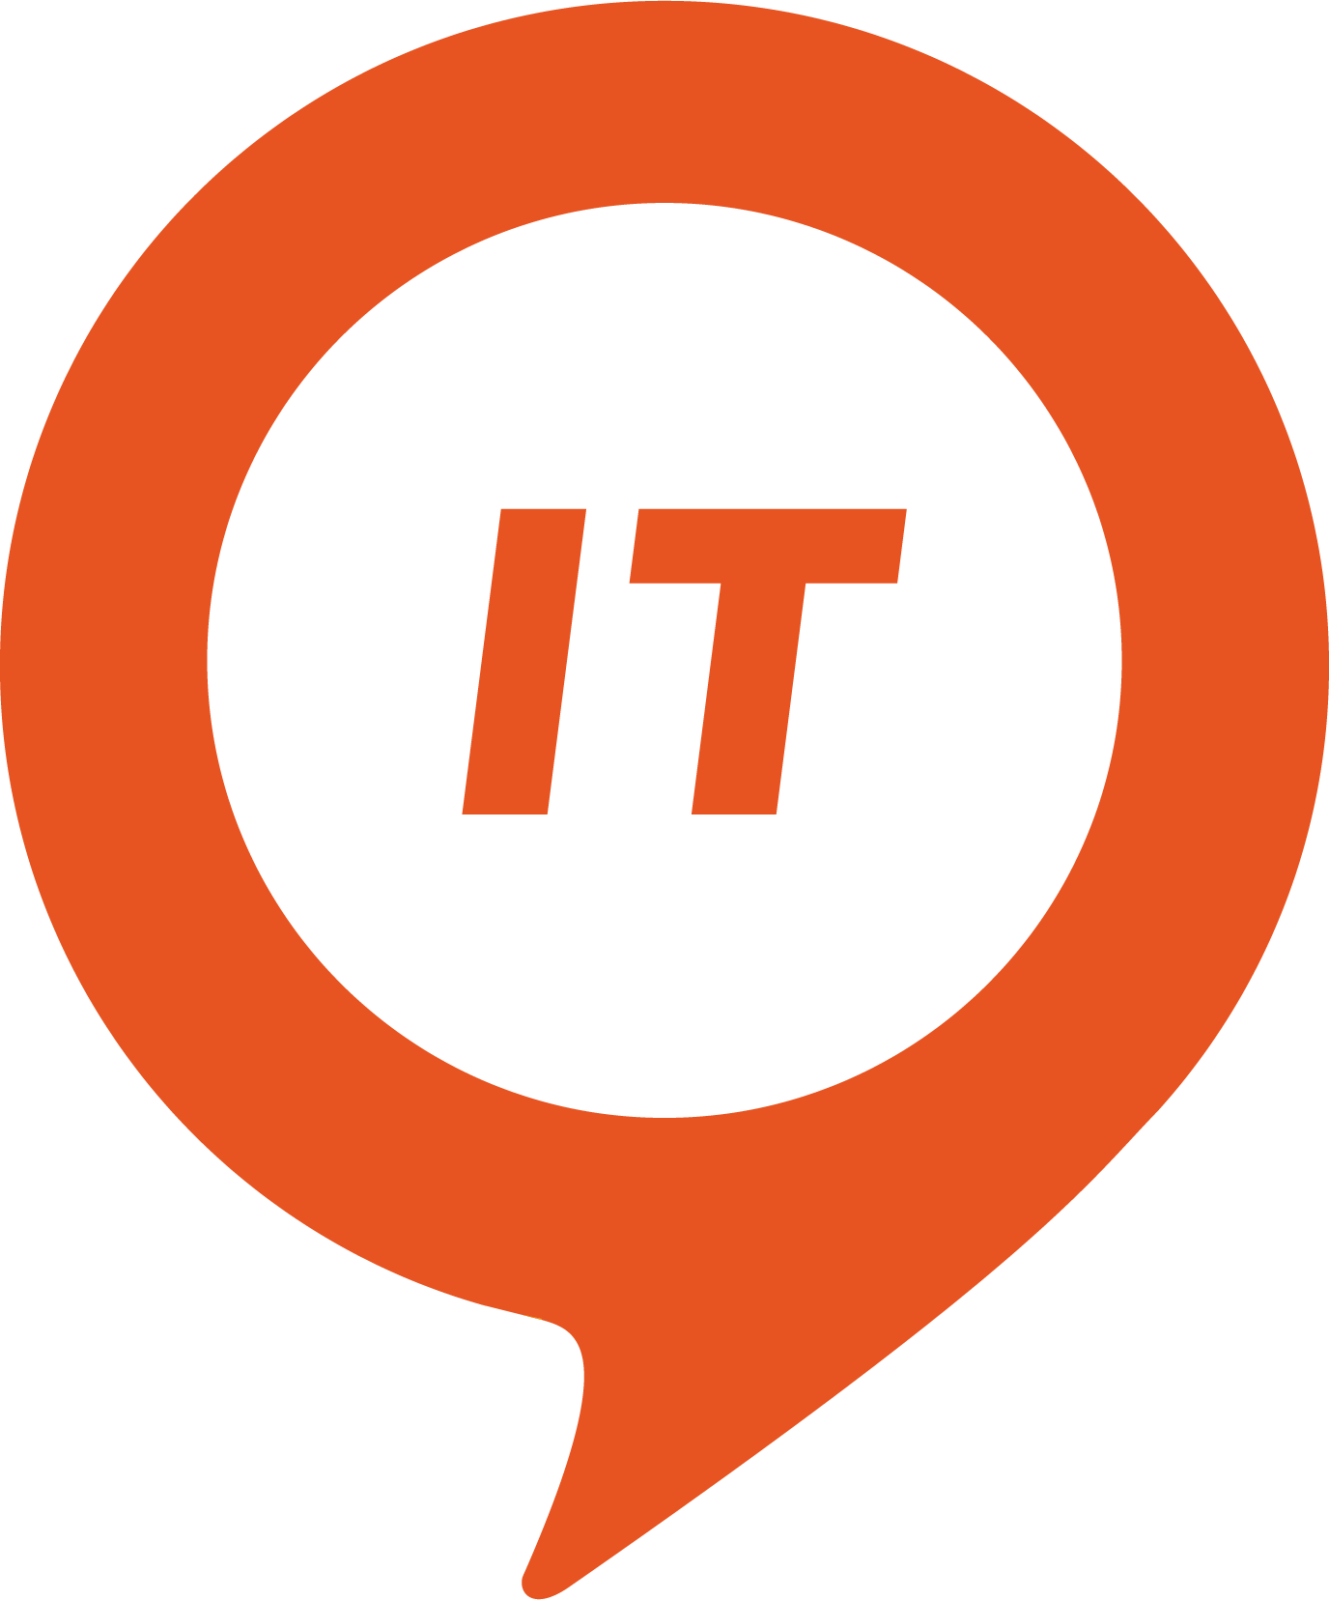 Gråt Iterator IT logo uden tekst